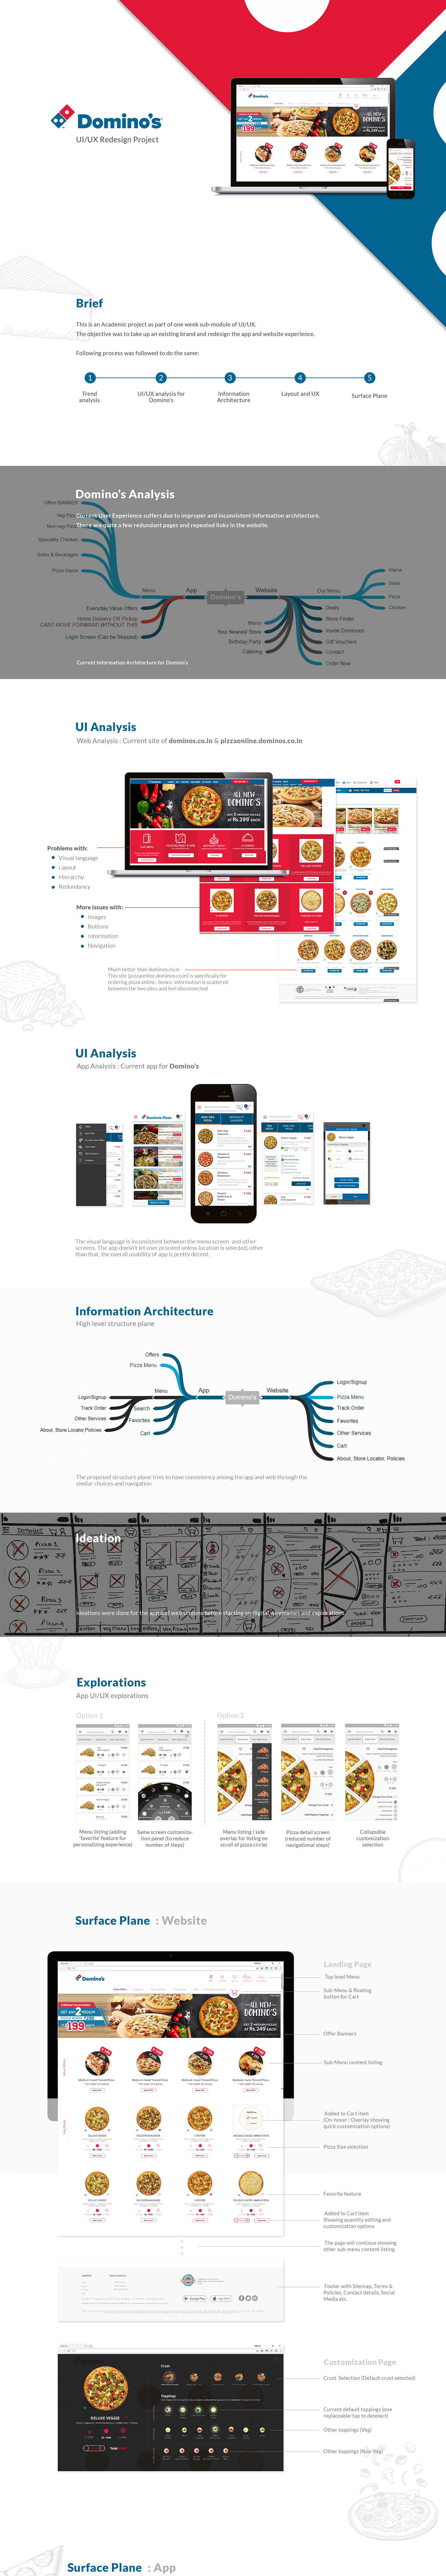 dominos UI/UX Web app design process Interaction design  information design adobeawards